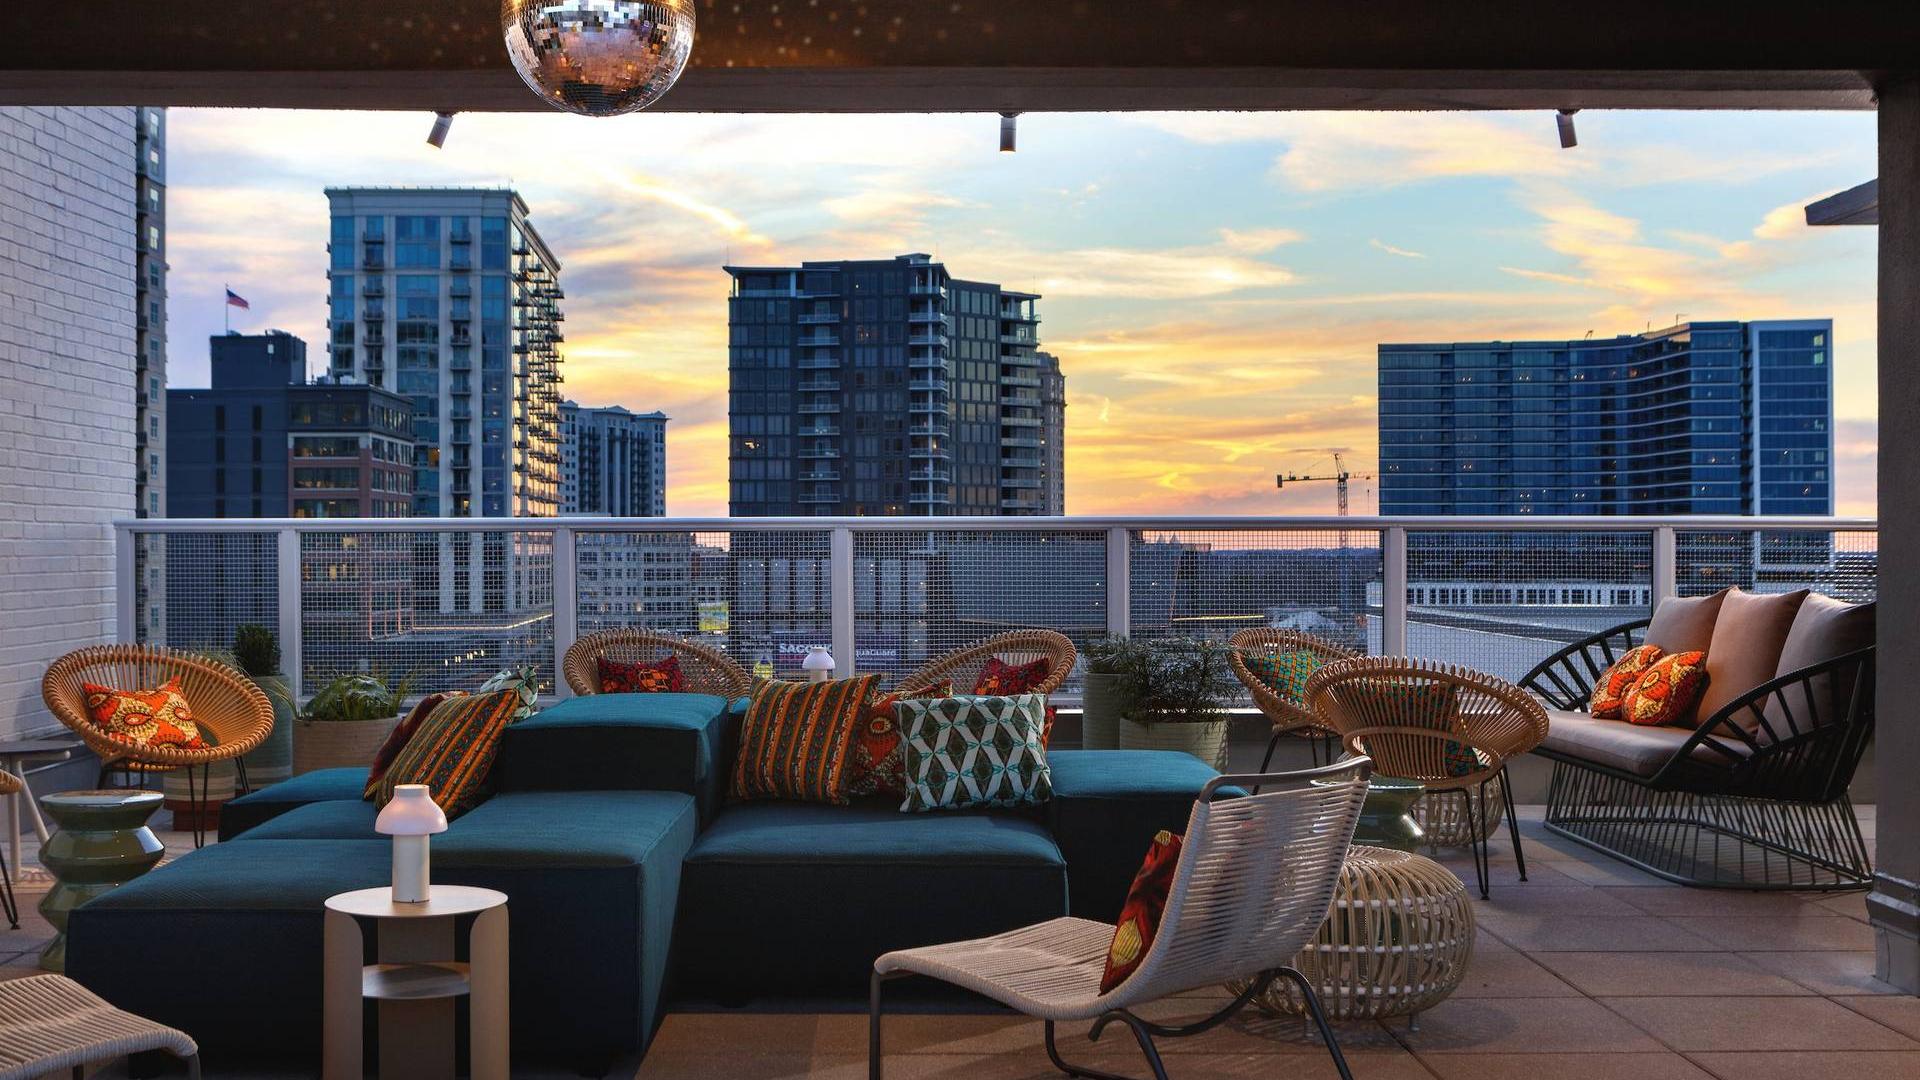 Outdoor Venues for Rent in Miami, FL